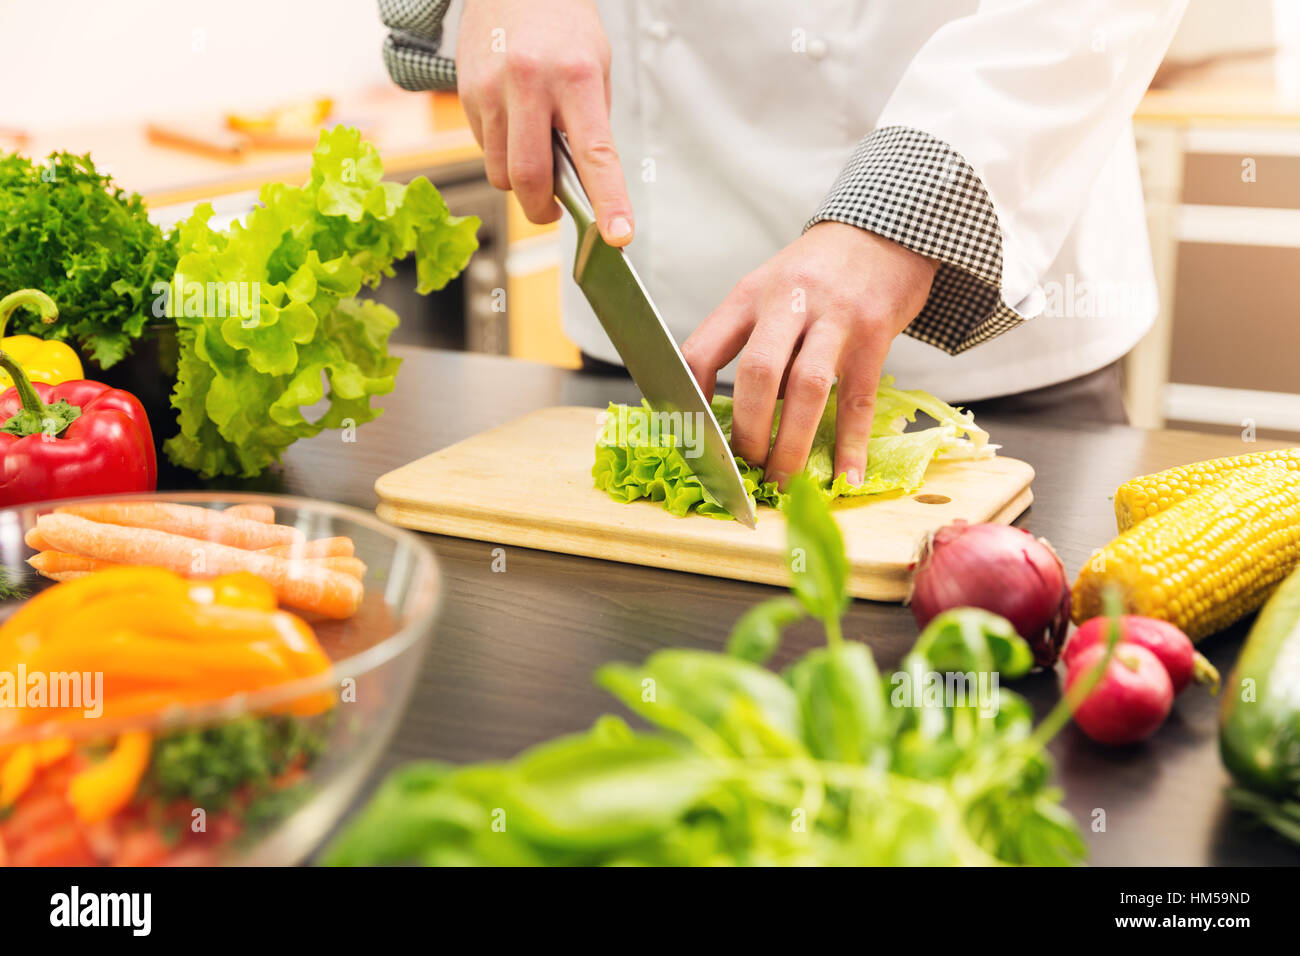 Une saine alimentation - vegetables lettuce in kitchen Banque D'Images